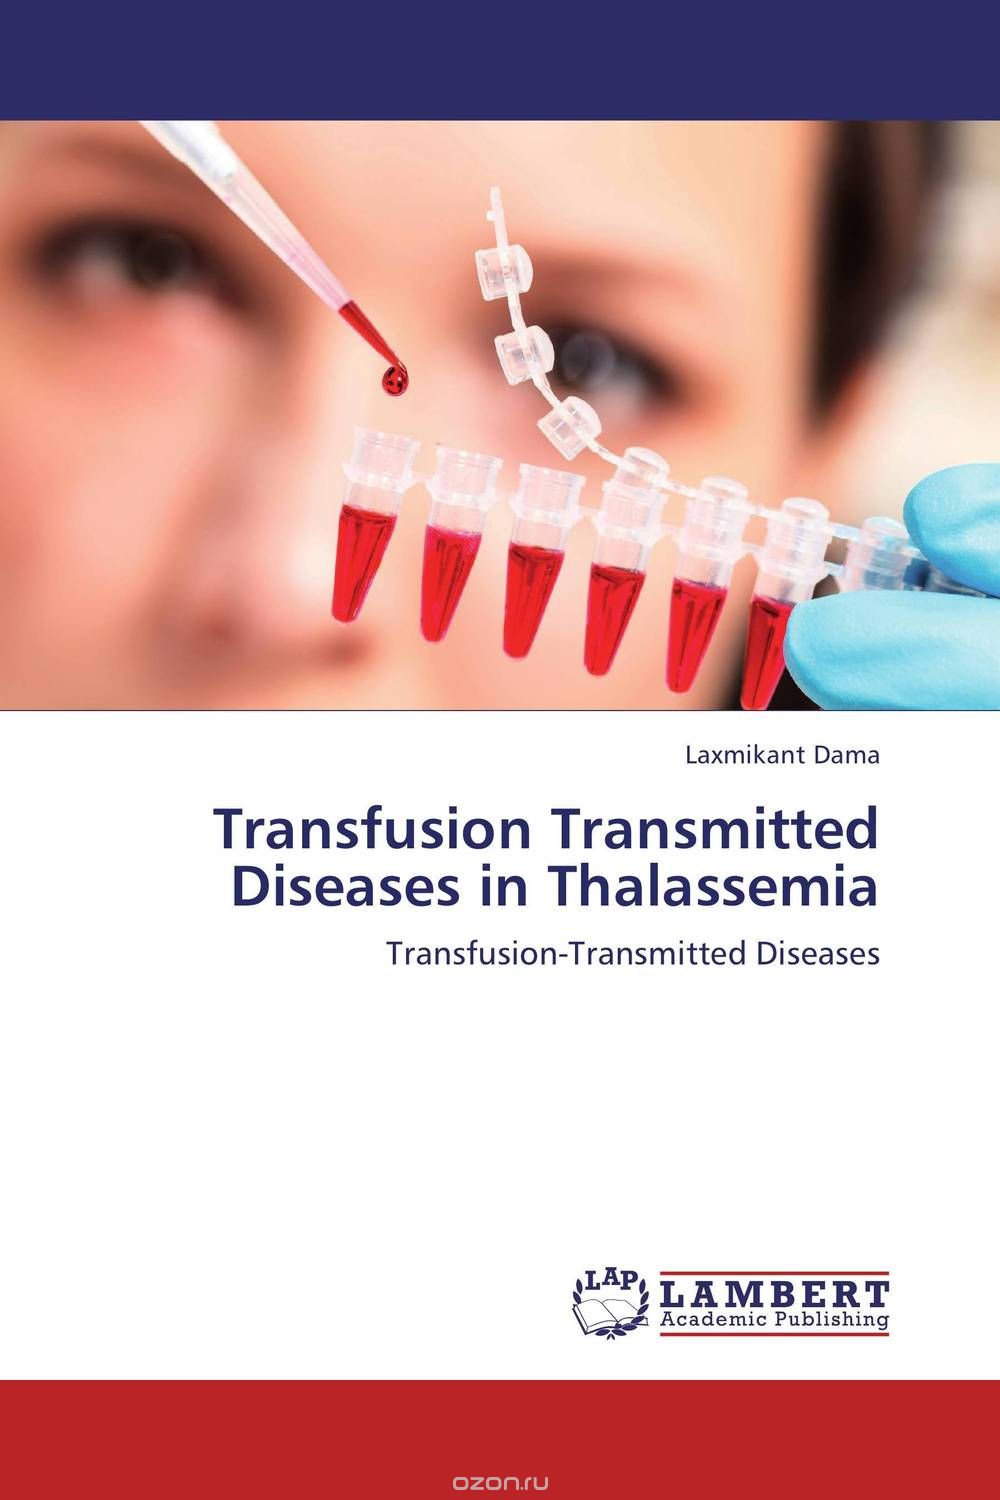 Скачать книгу "Transfusion Transmitted Diseases in Thalassemia"